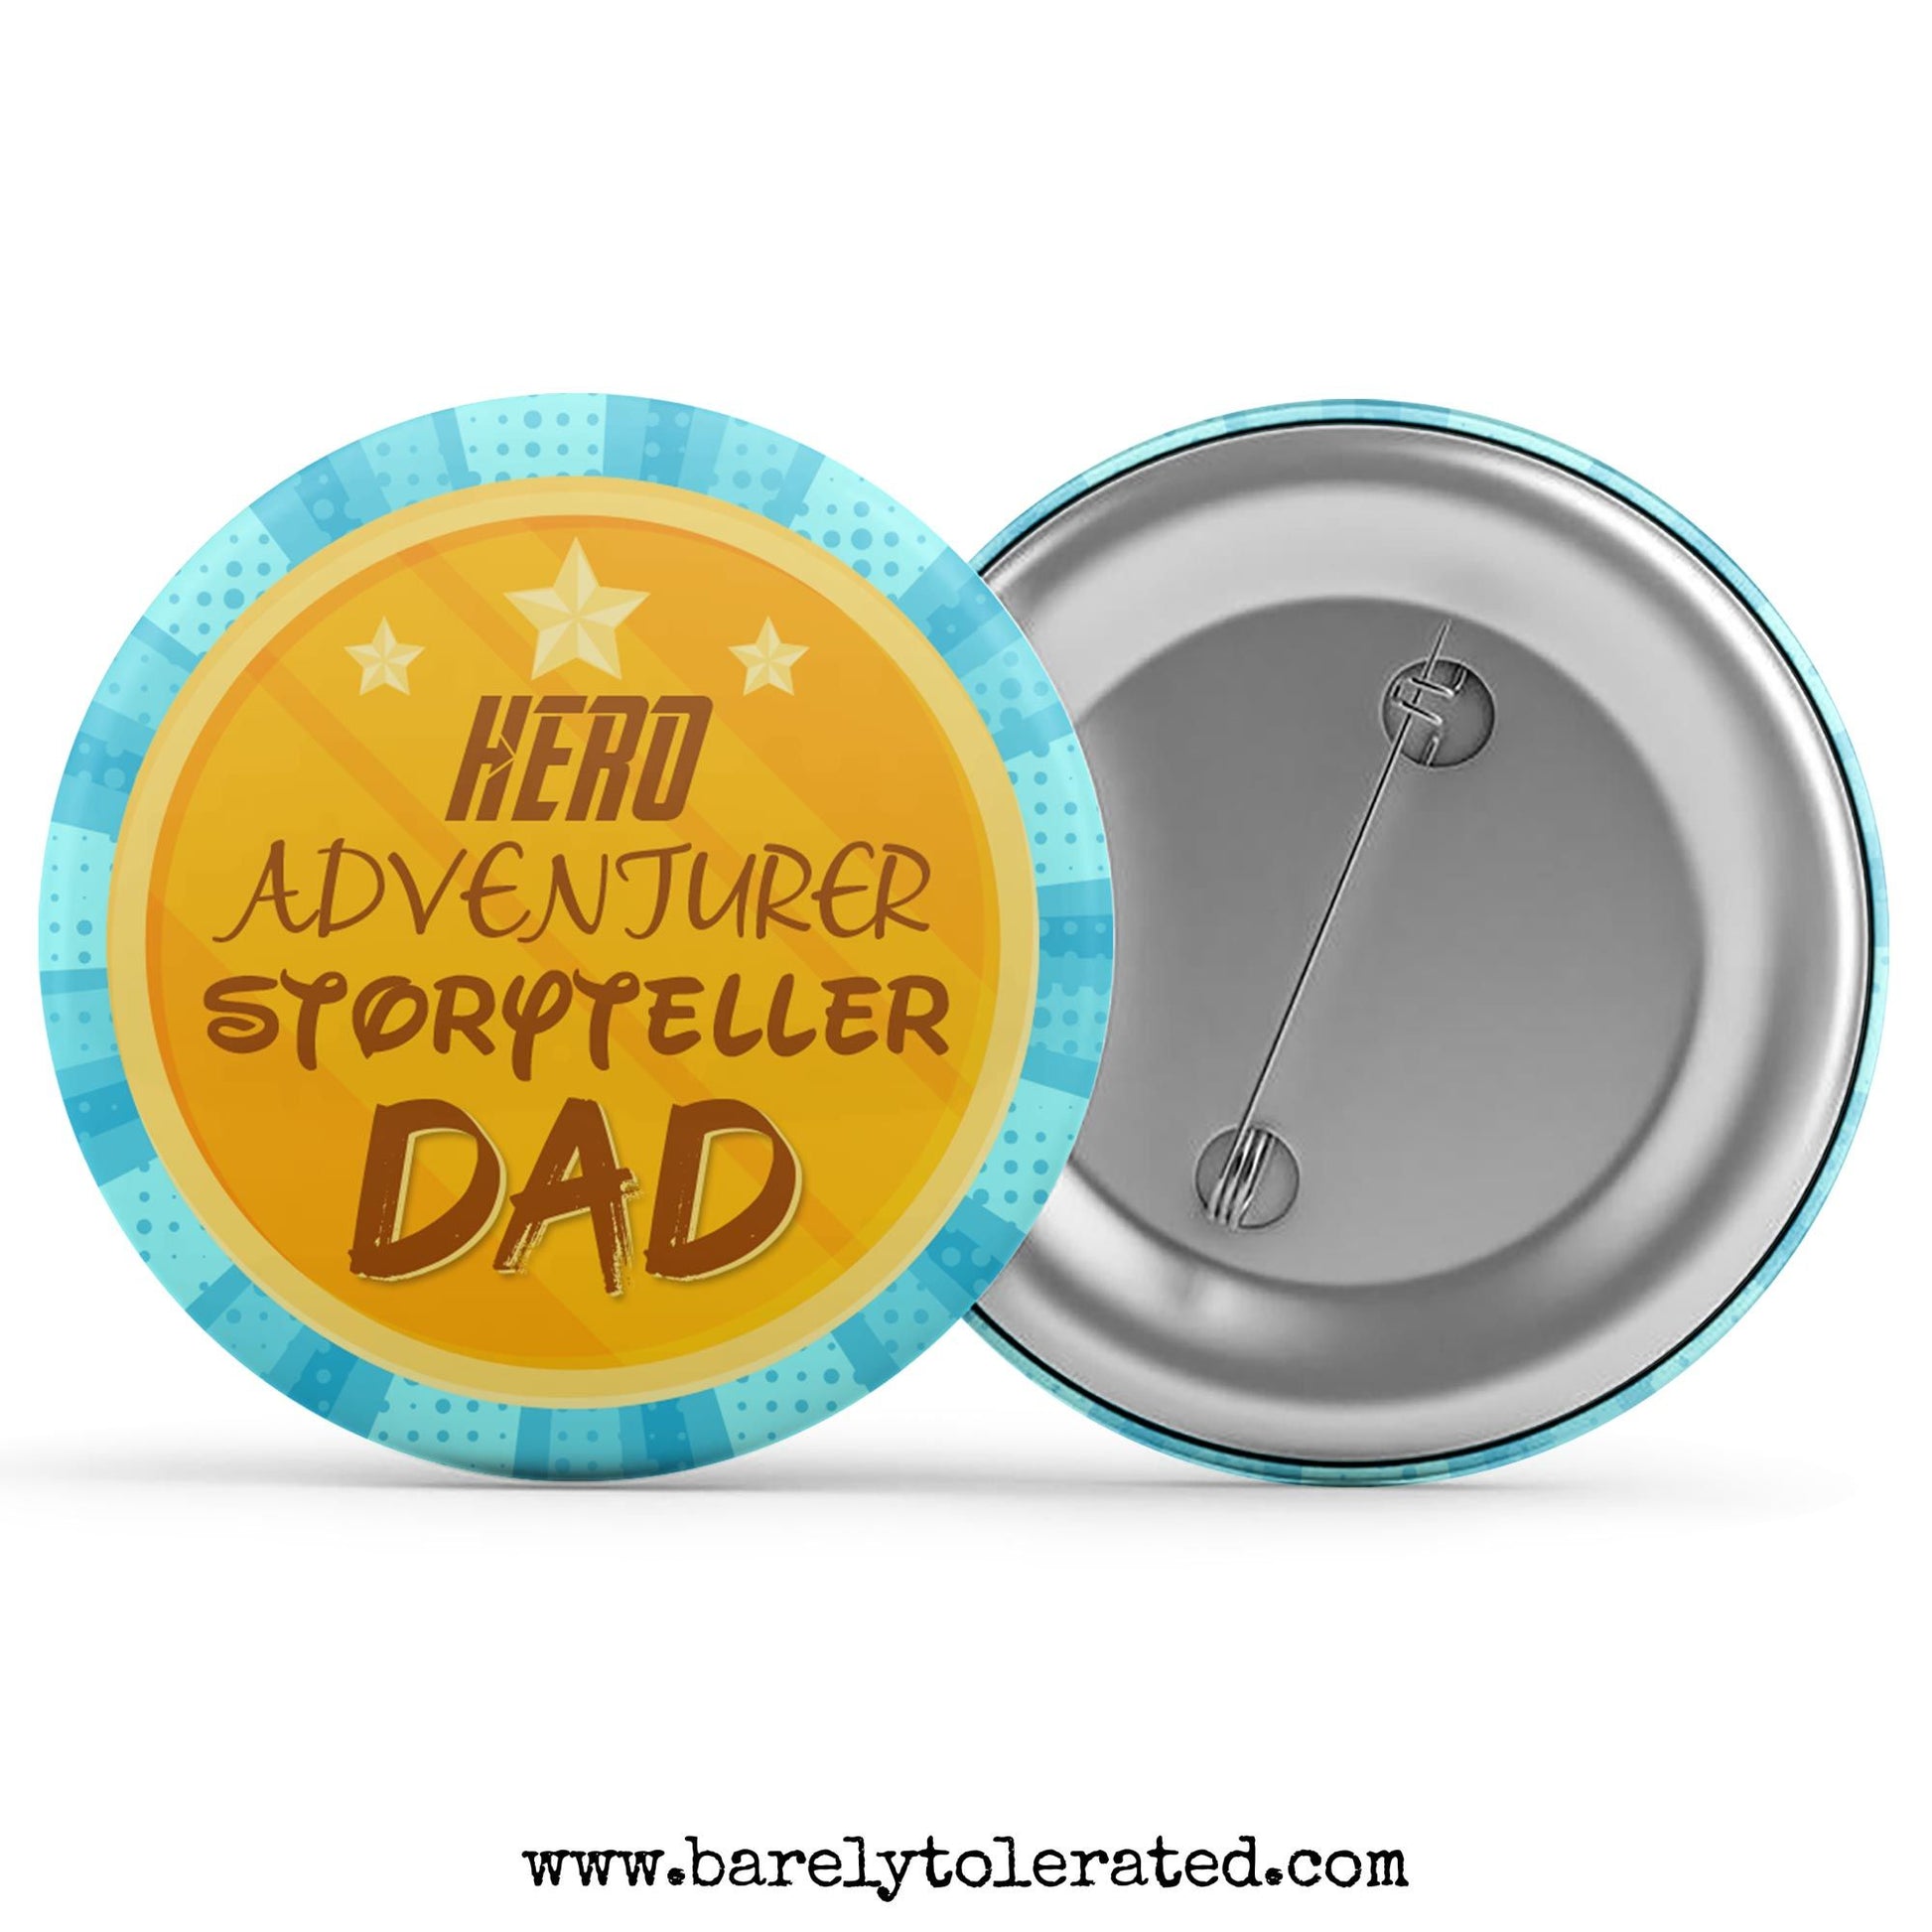 Hero Adventurer Storyteller Dad Image